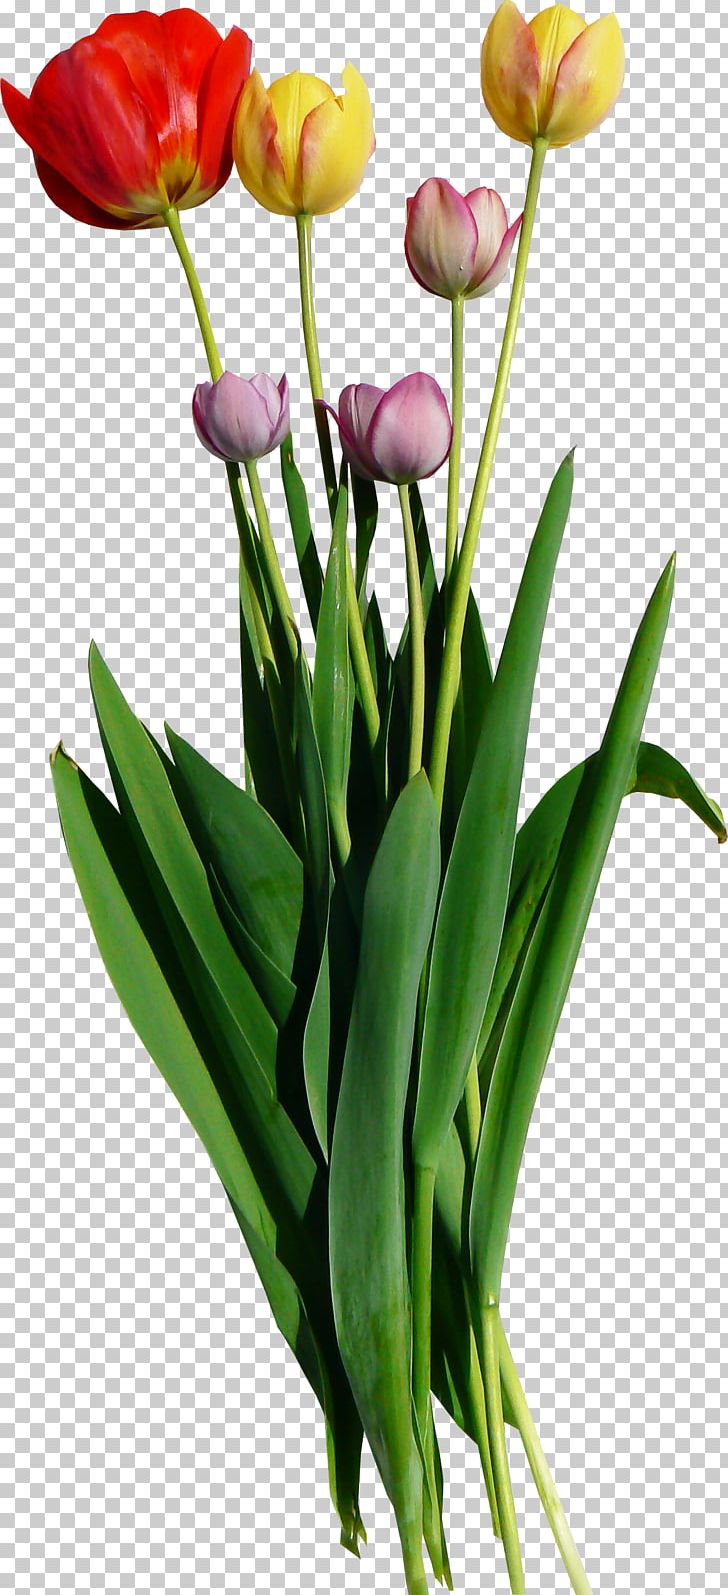 Cut Flowers Tulip Mania PNG, Clipart, Art, Cut Flowers, Floral Design, Floristry, Flower Free PNG Download